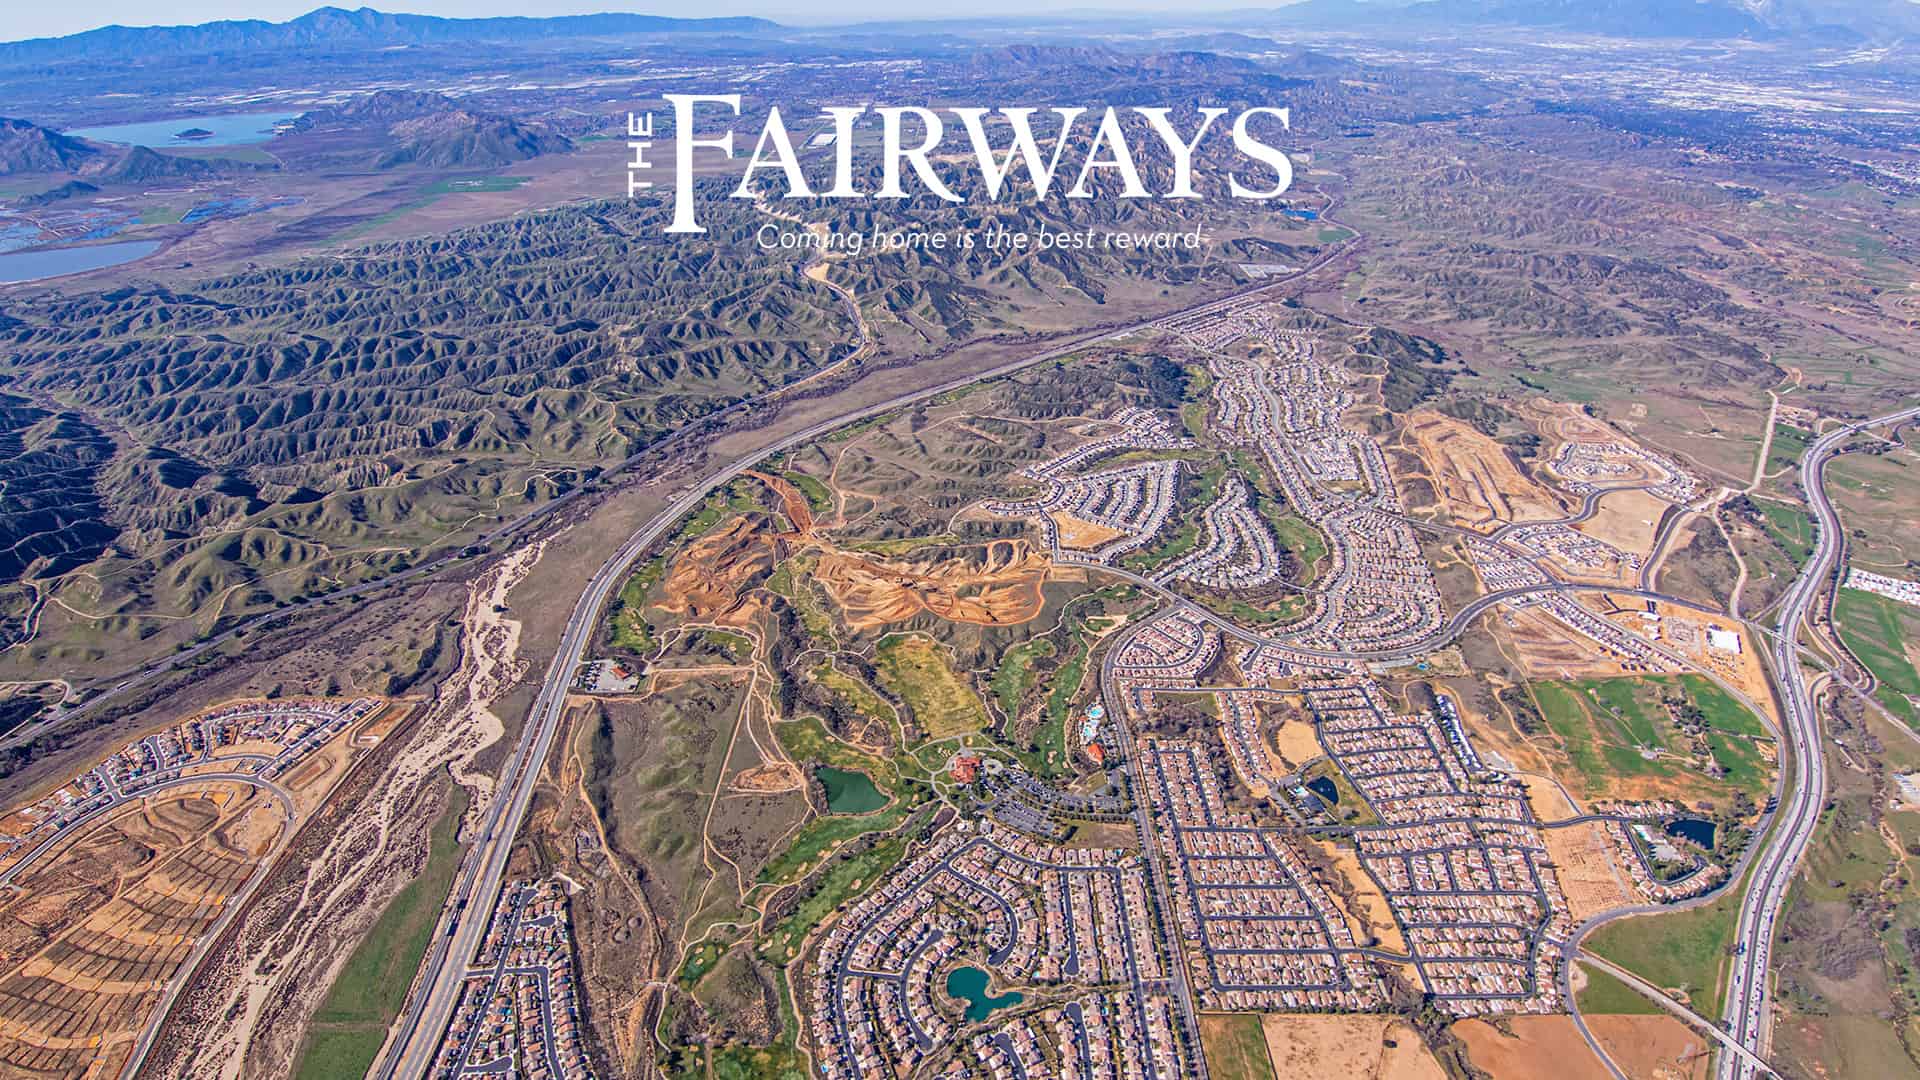 The Fairways in Beaumont, CA